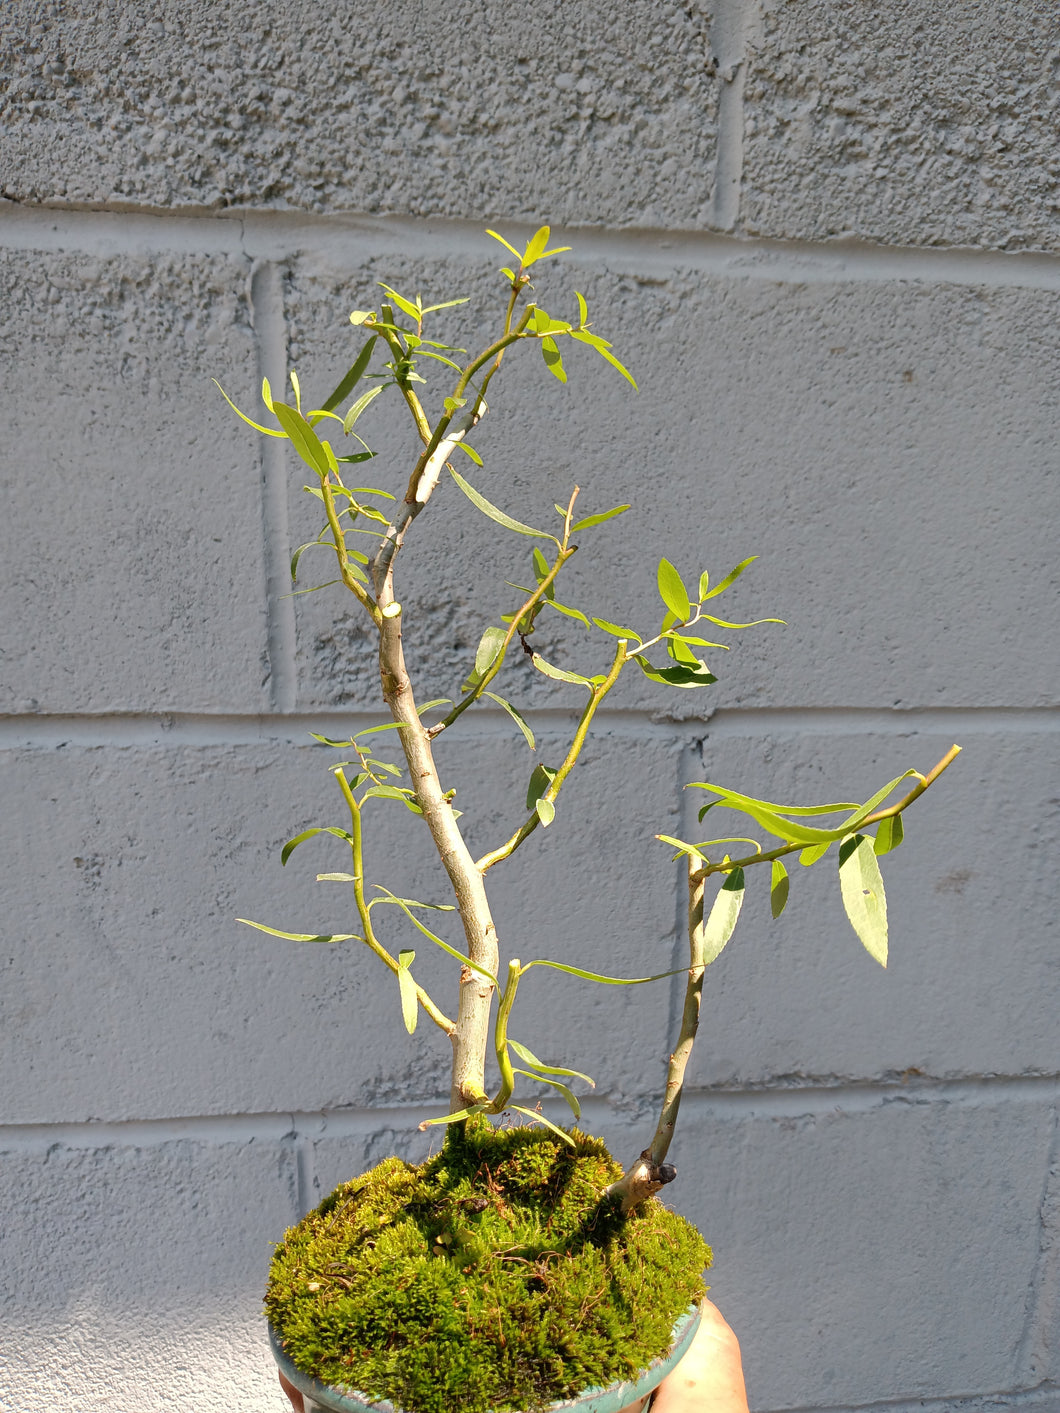 Corkscrew willow Salix matsudana